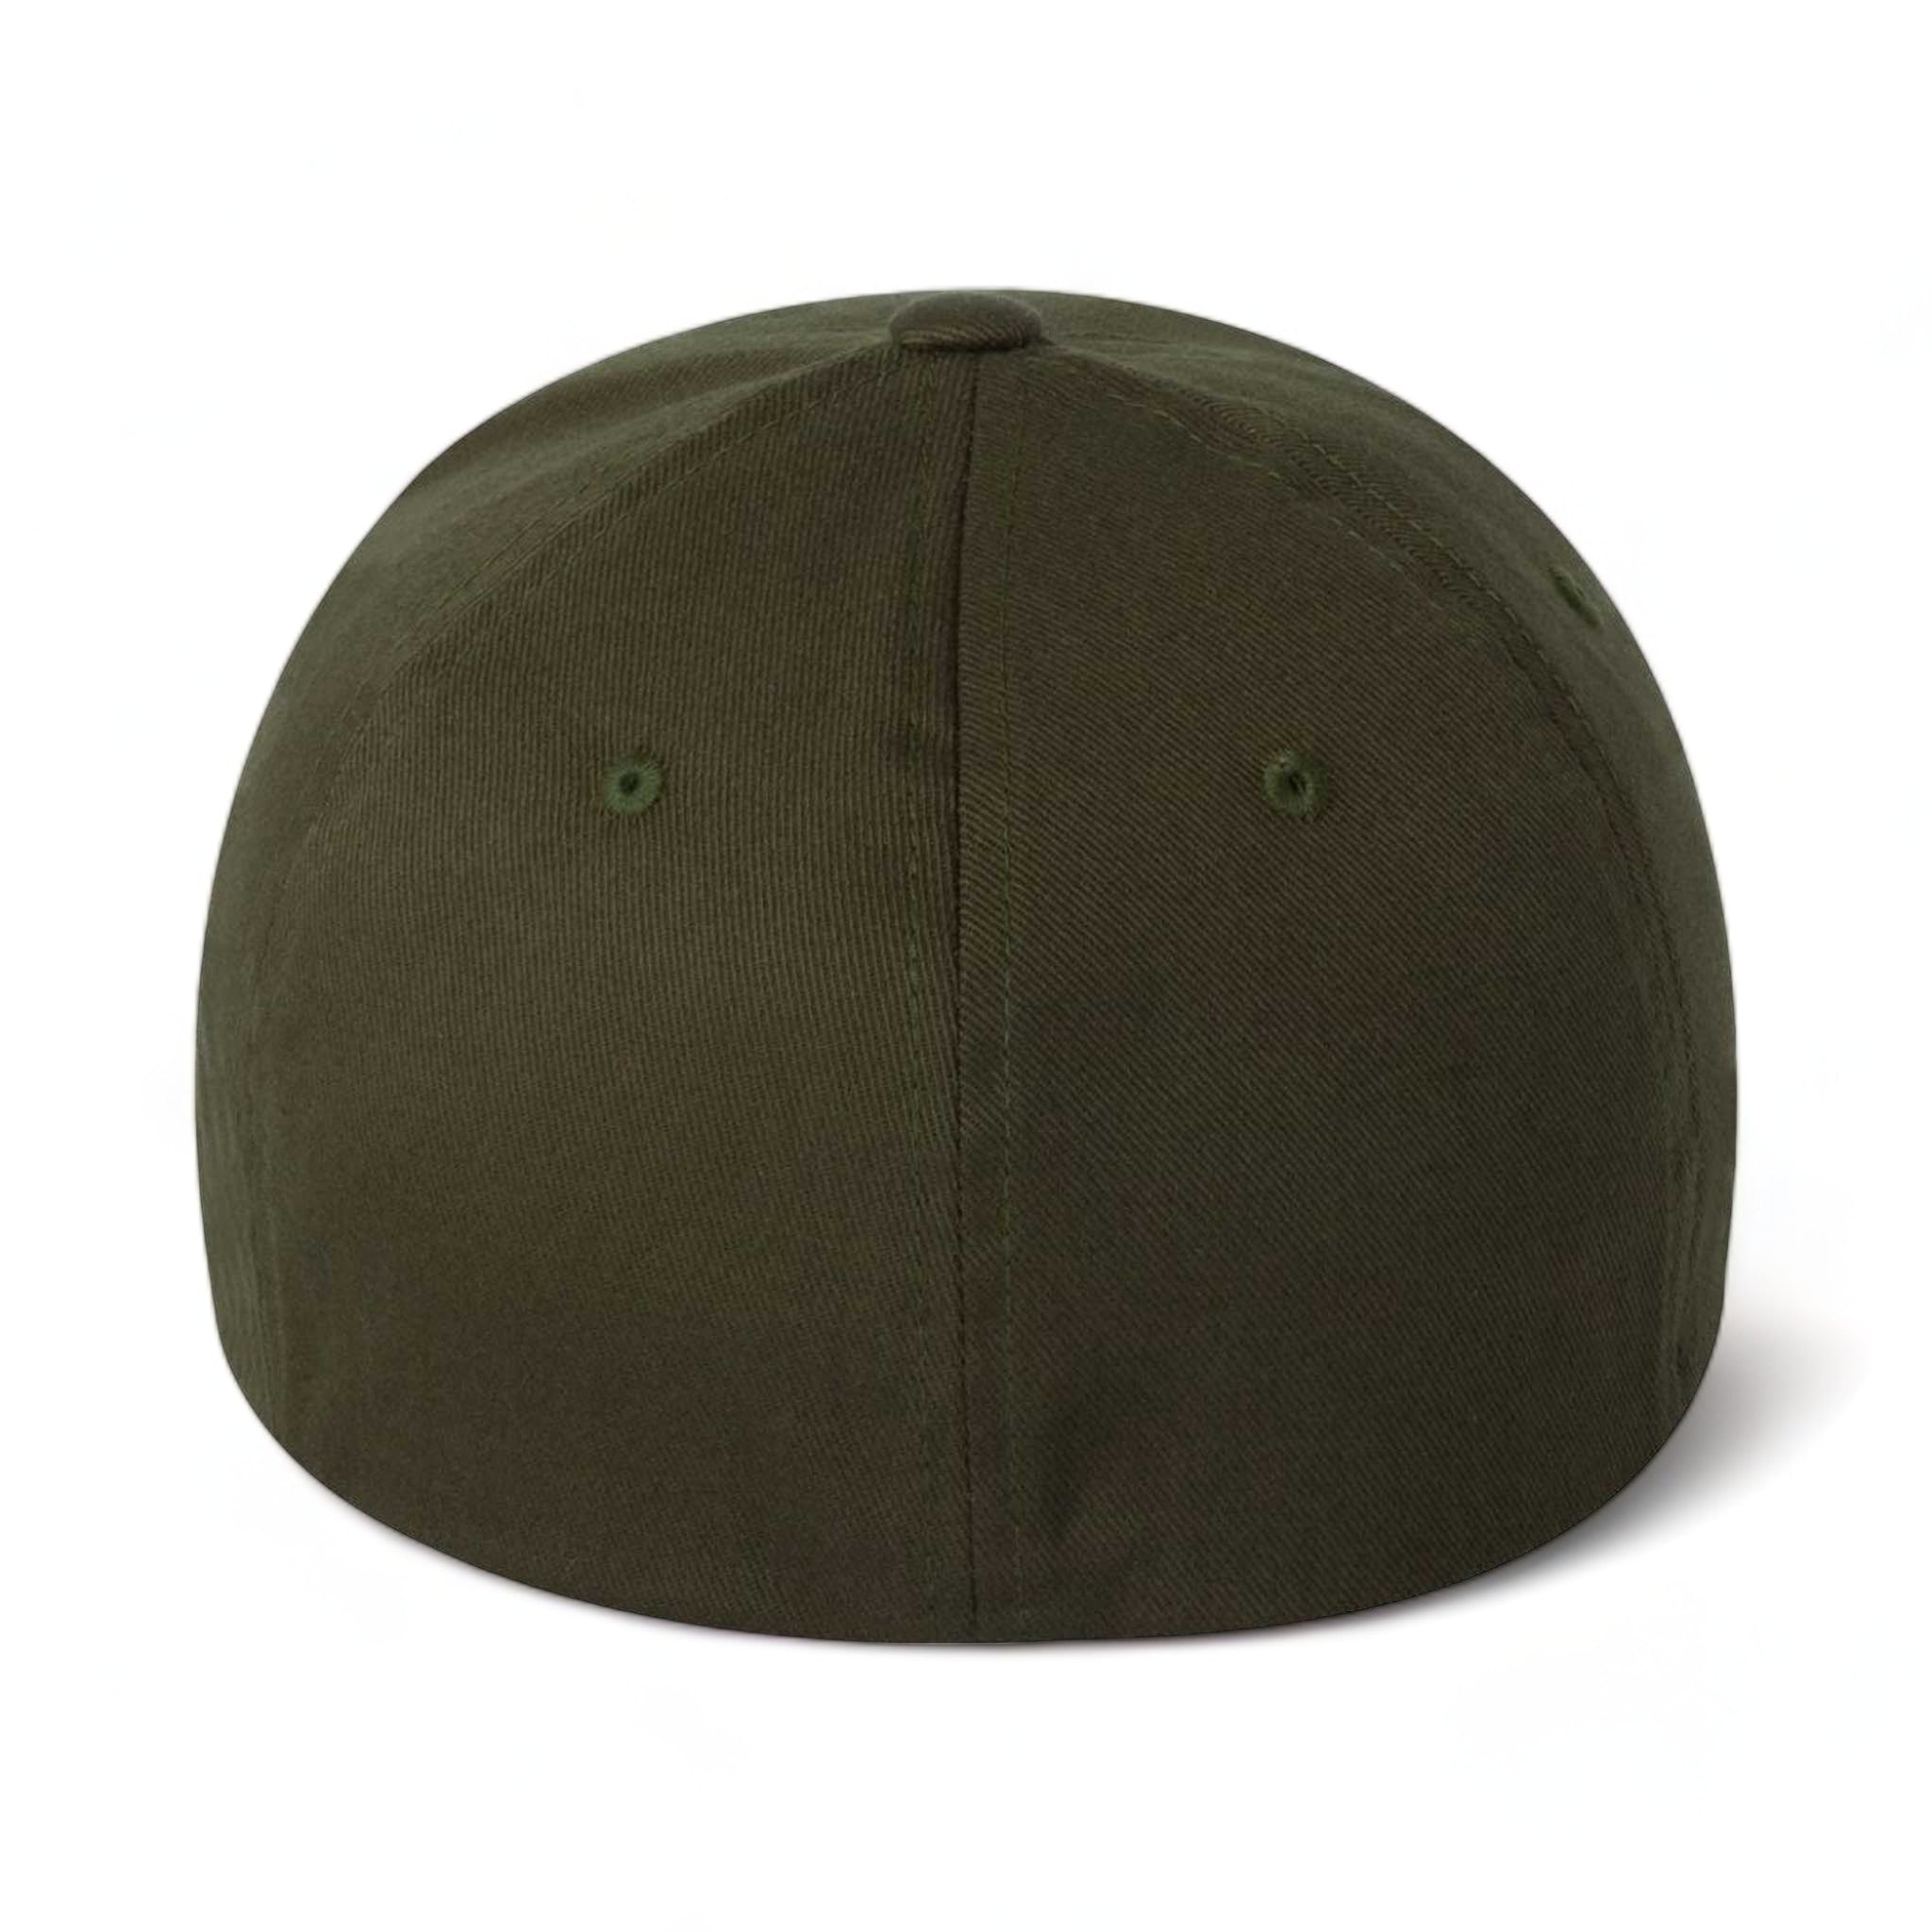 Back view of Flexfit 6277 custom hat in olive